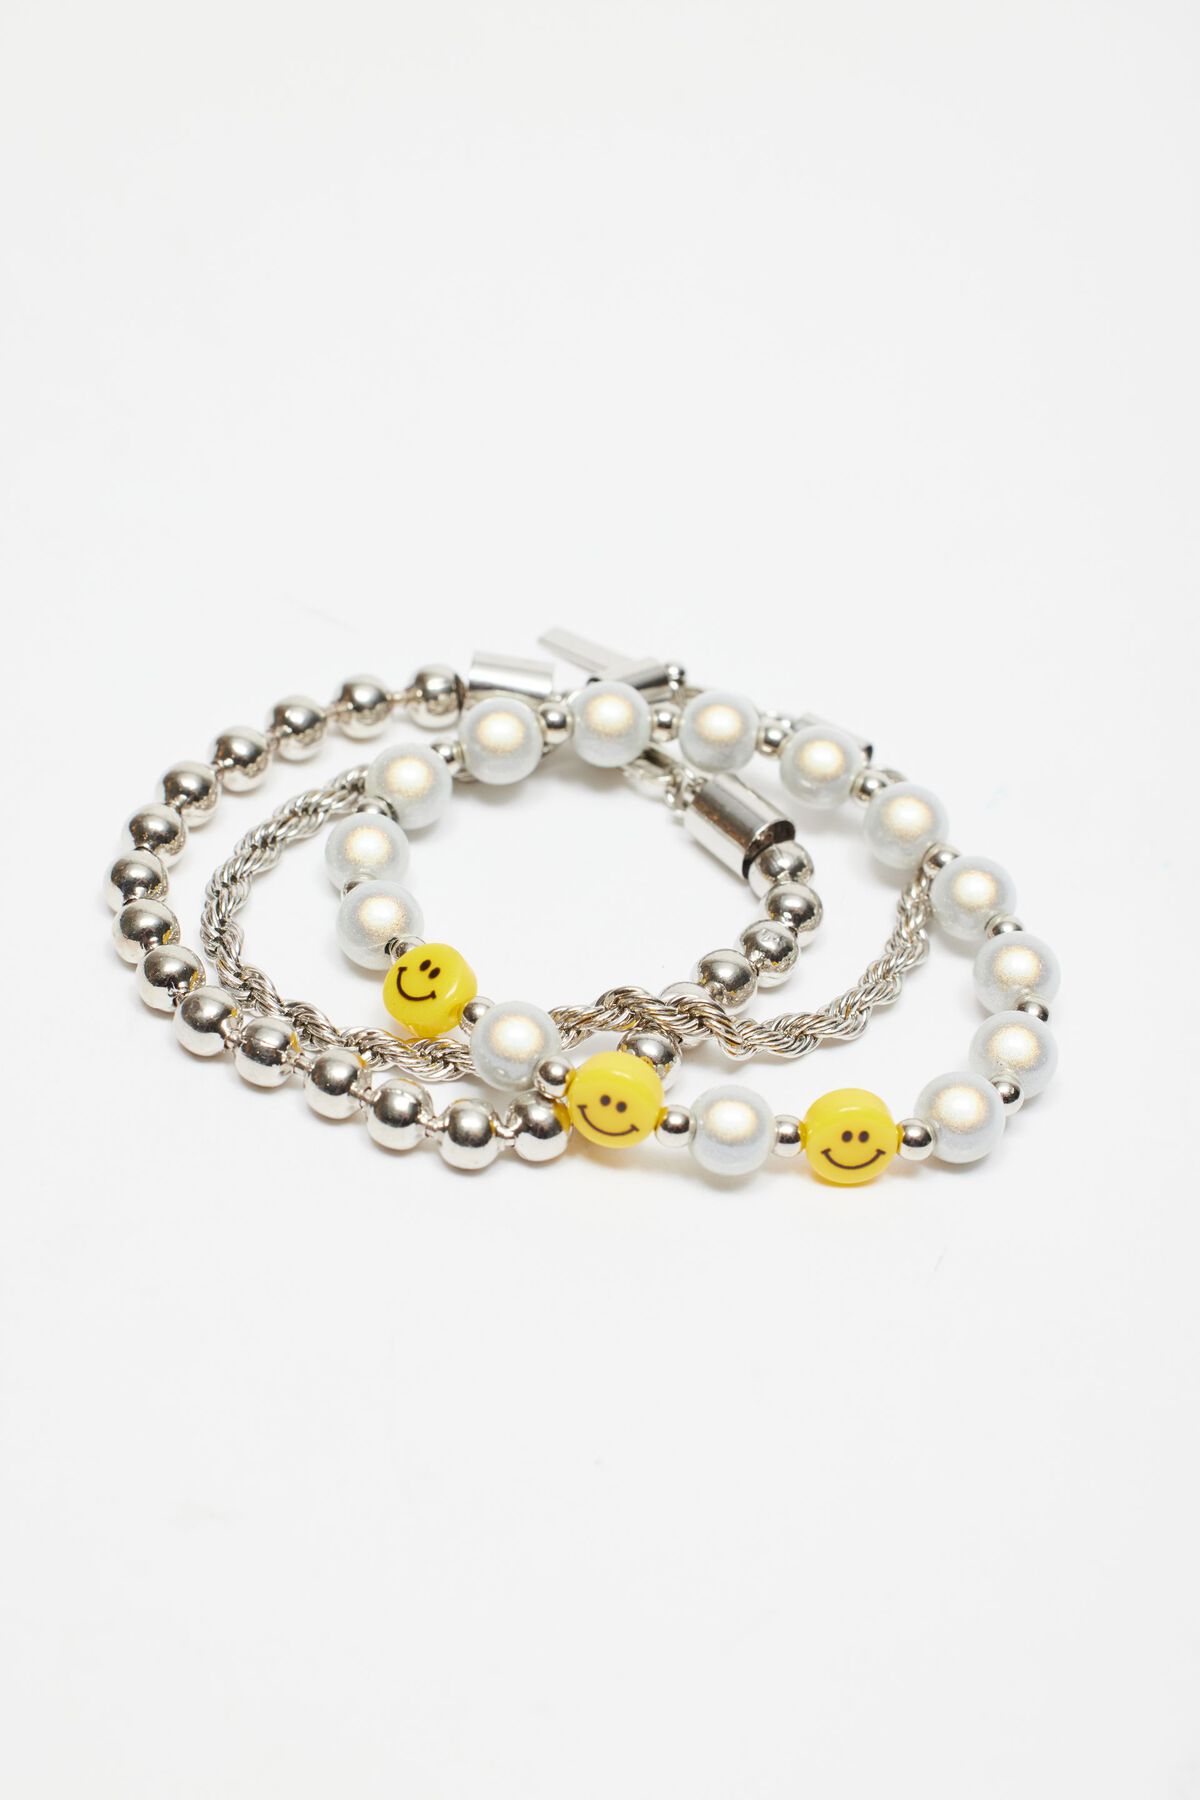 Garage Set of 3 Ball Chain & Smiley Beads Bracelet. 3